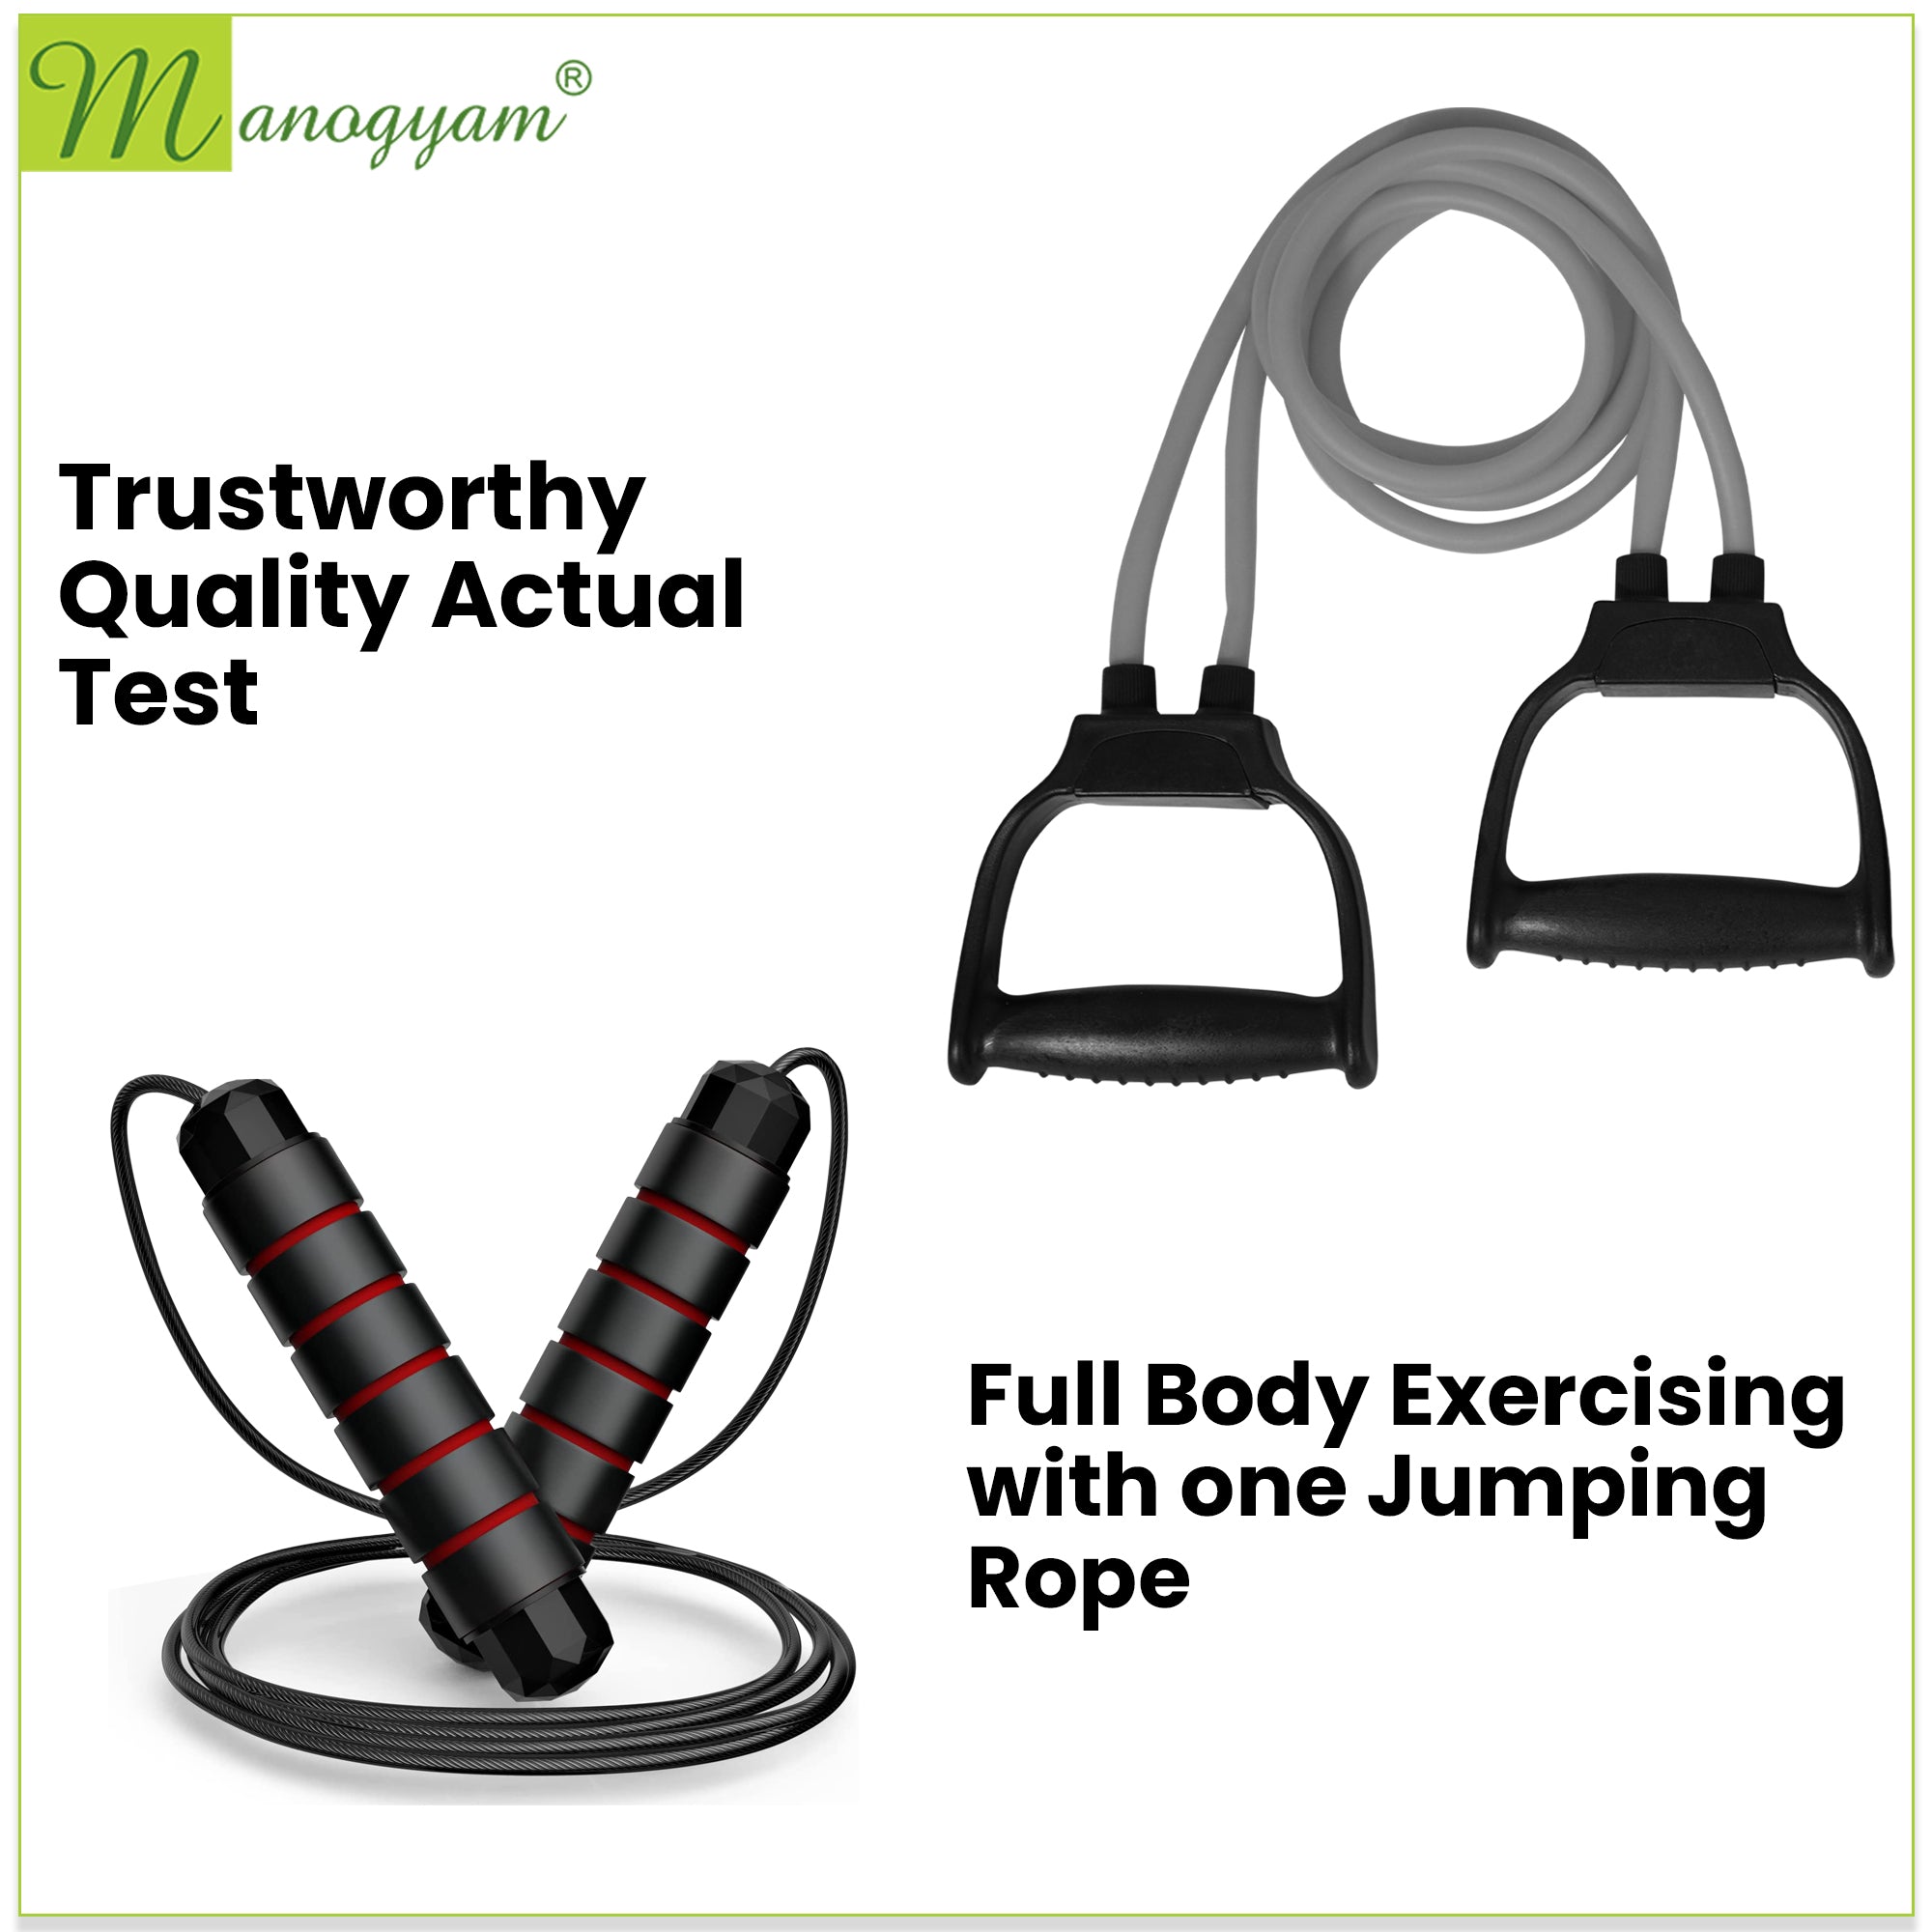 Manogyam Dynamic Duo Fitness Combo: Speedy Skipping Rope & Toning Tube Set